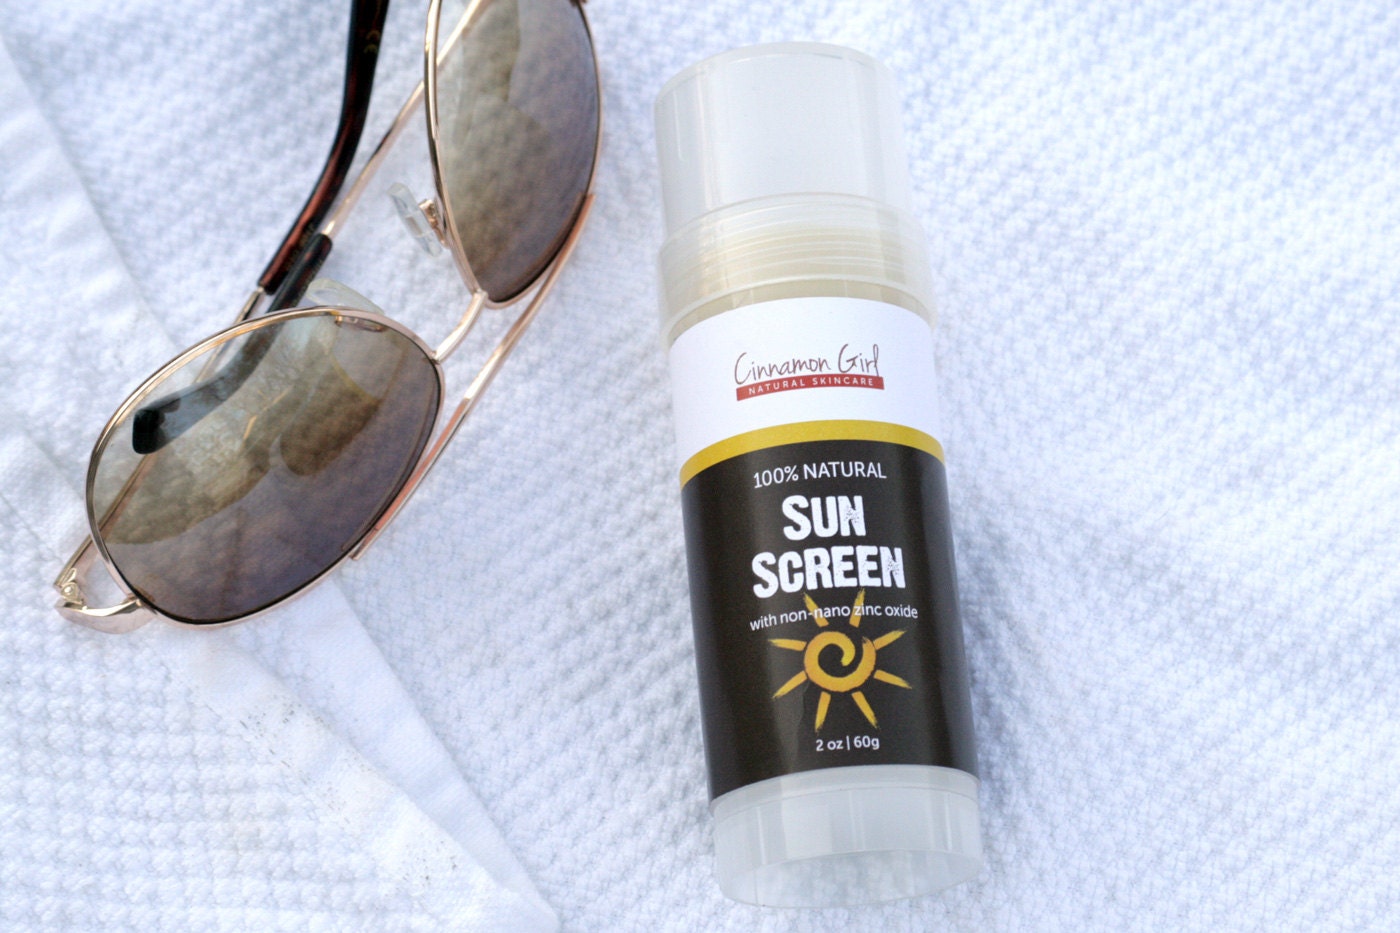 100 Natural Sunscreen with nonnano zinc oxide SPF 20